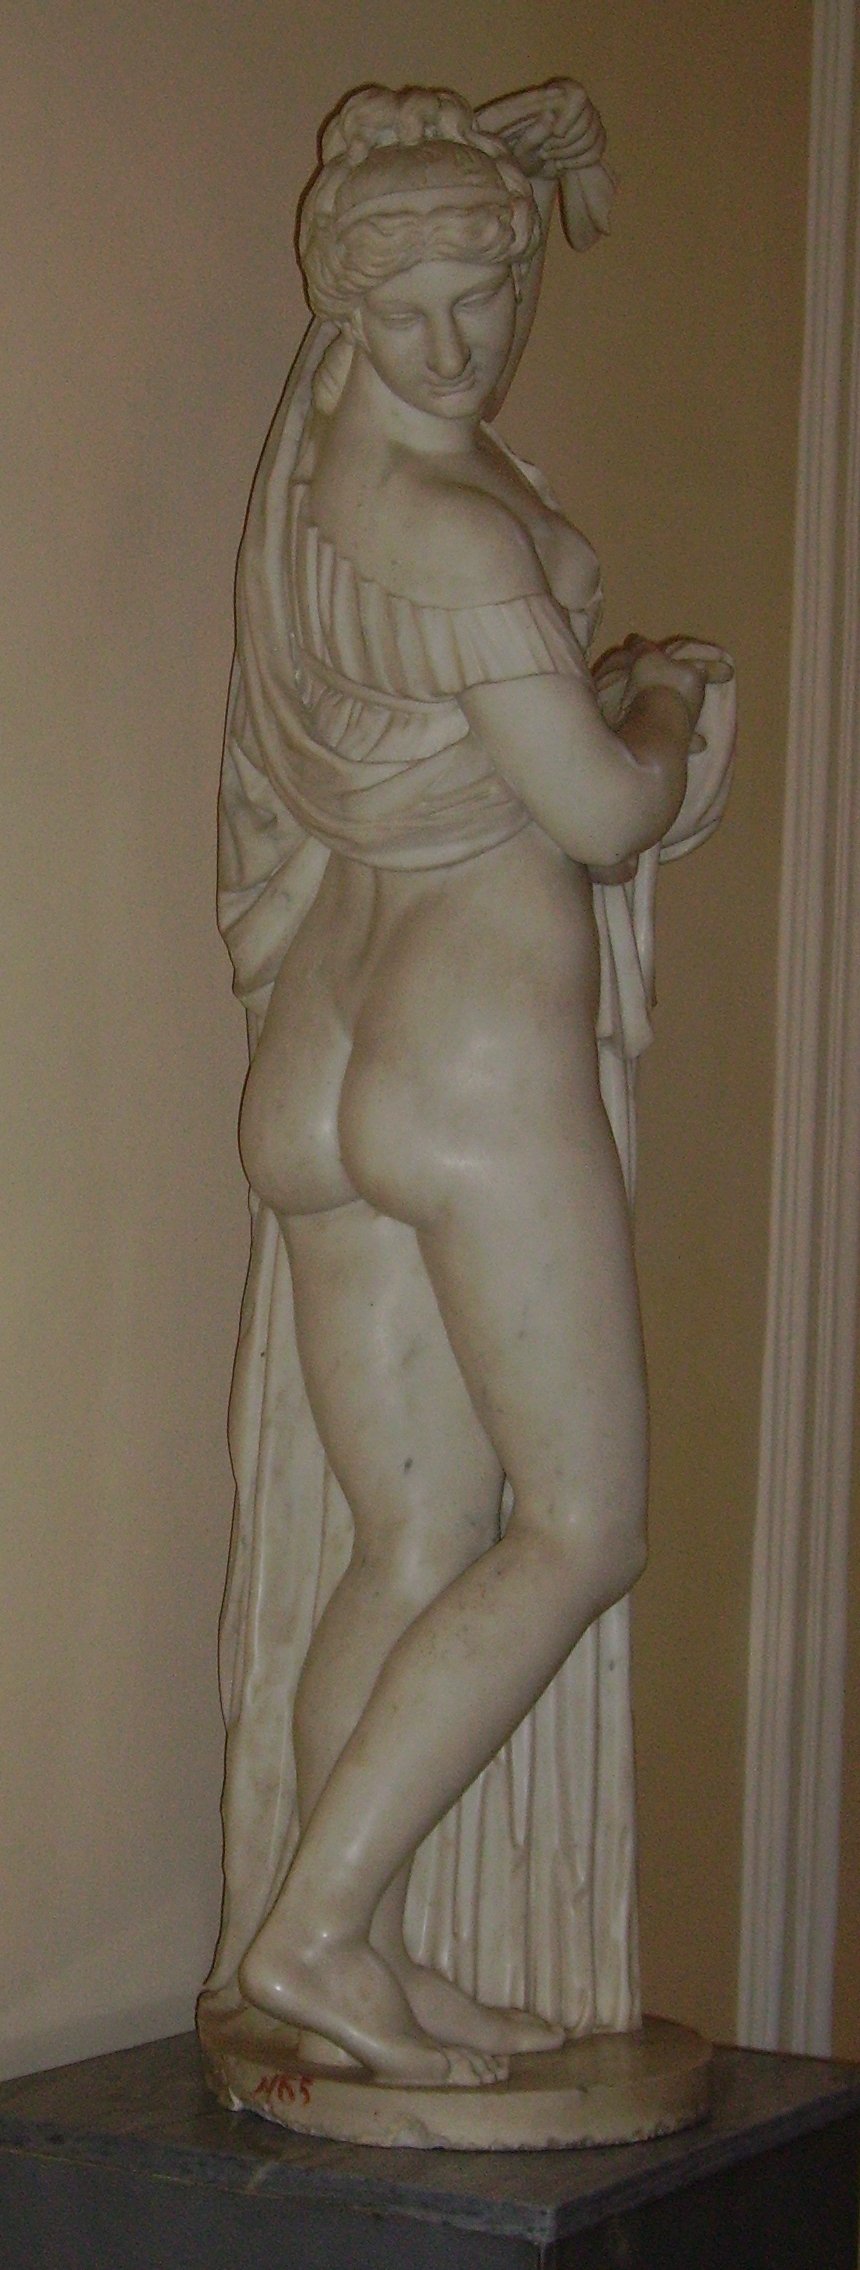 LiteArte - El encanto de Venus Calipigia. Una Venus Calipigia es